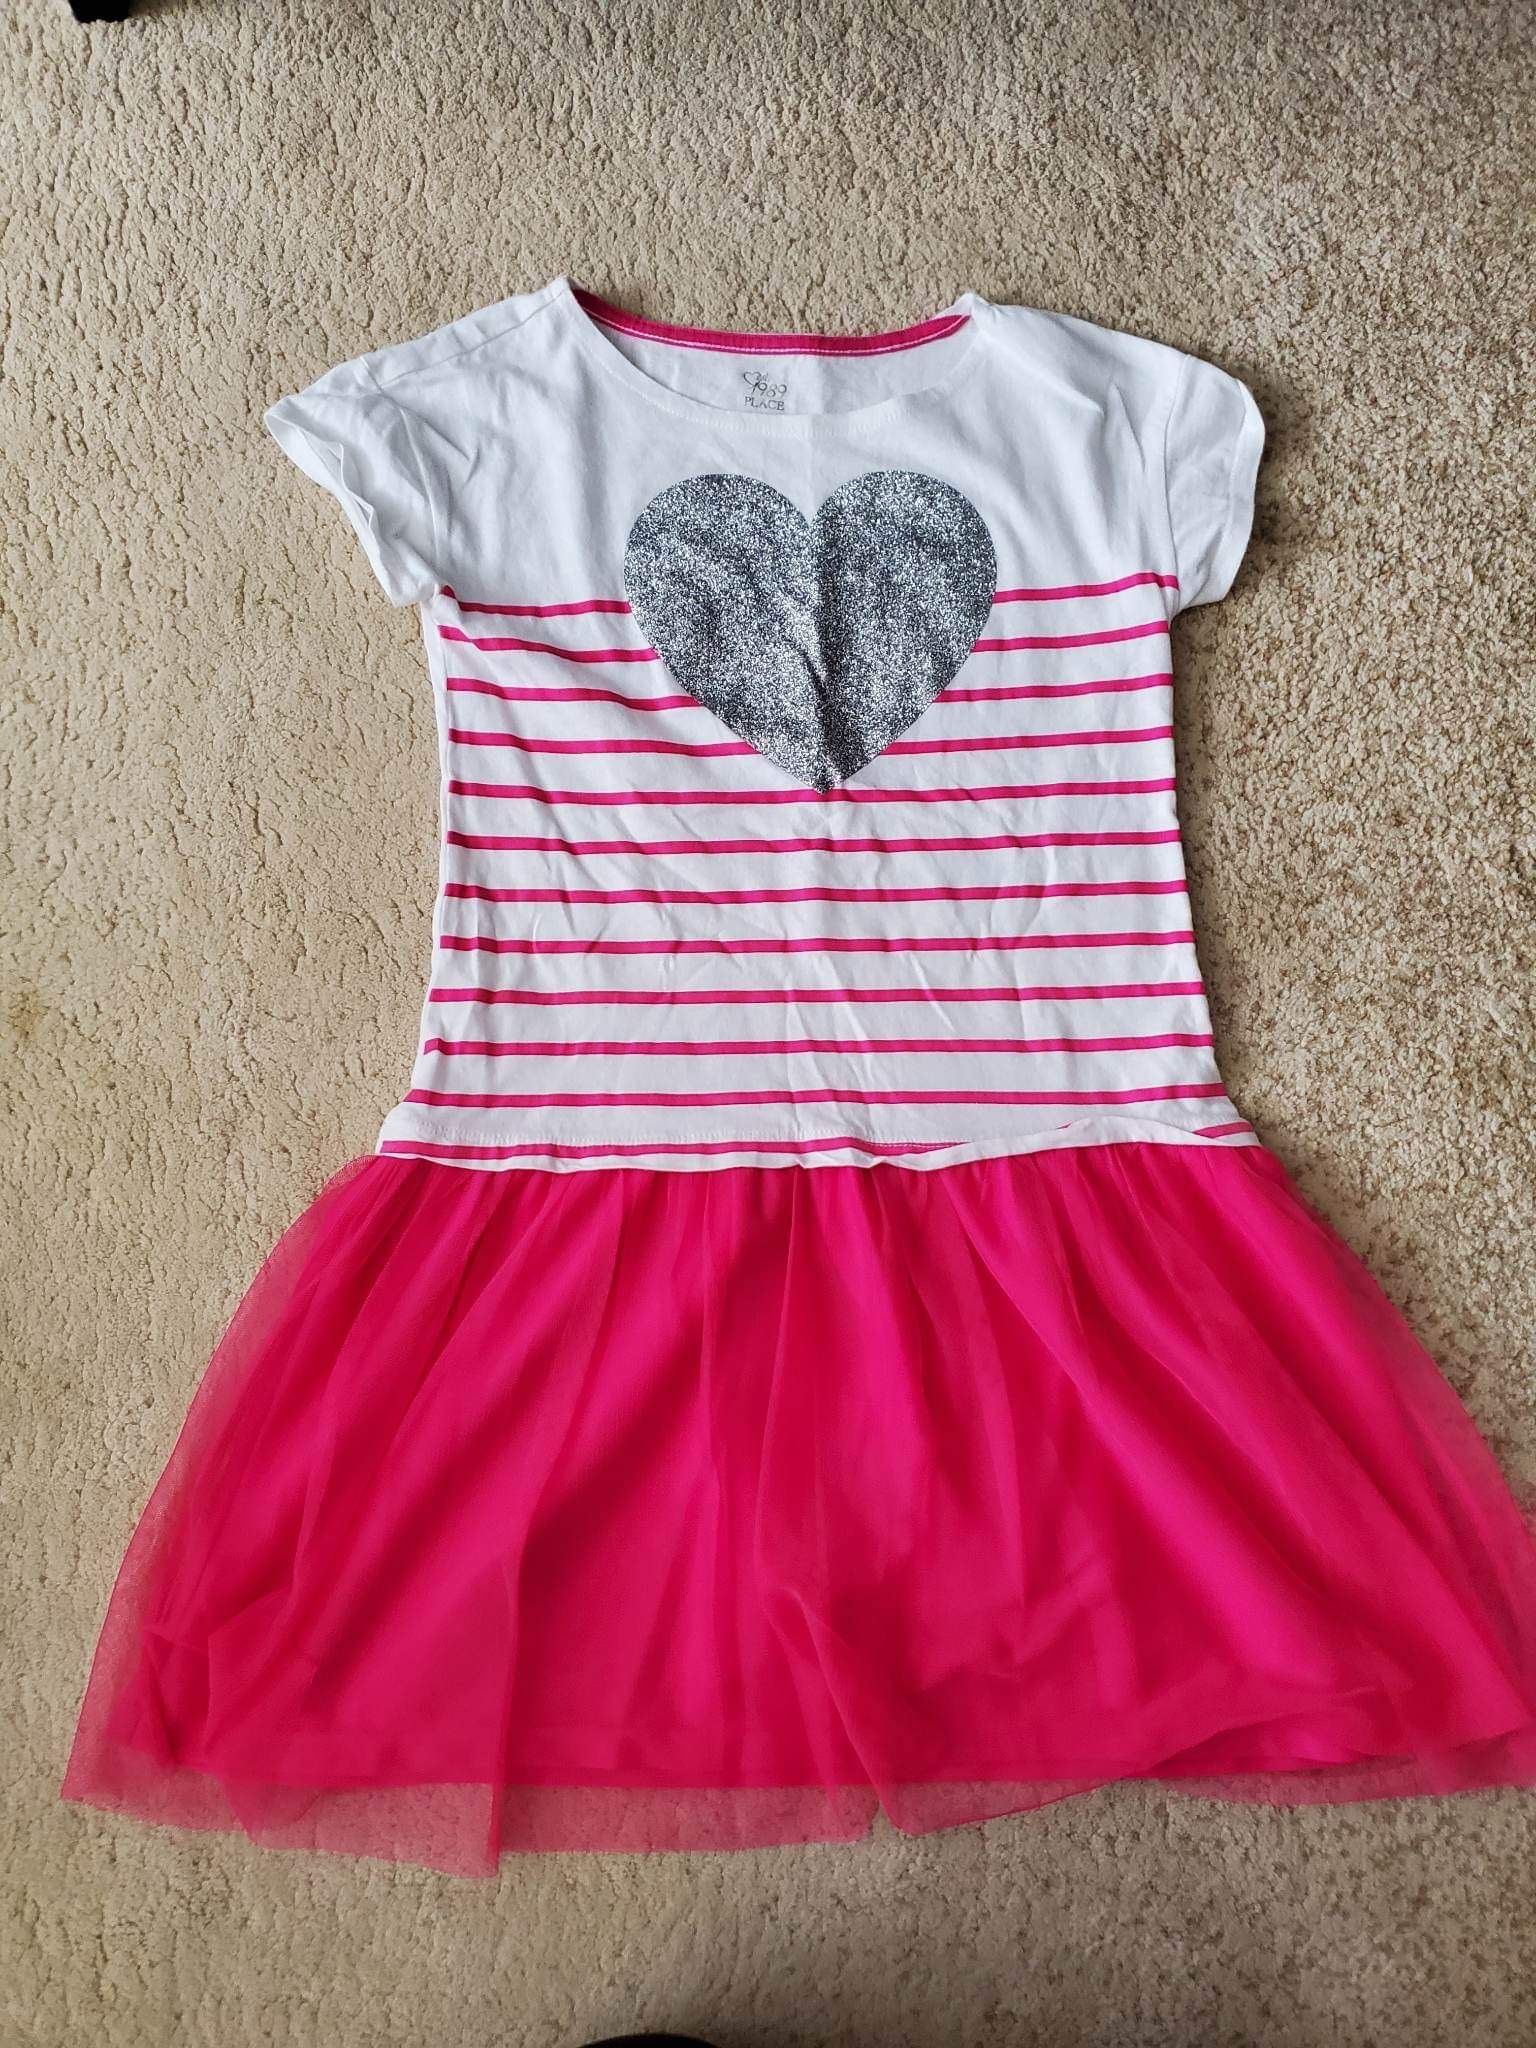 Girls Summer Dress Size M7/8 Kids Childrens Place